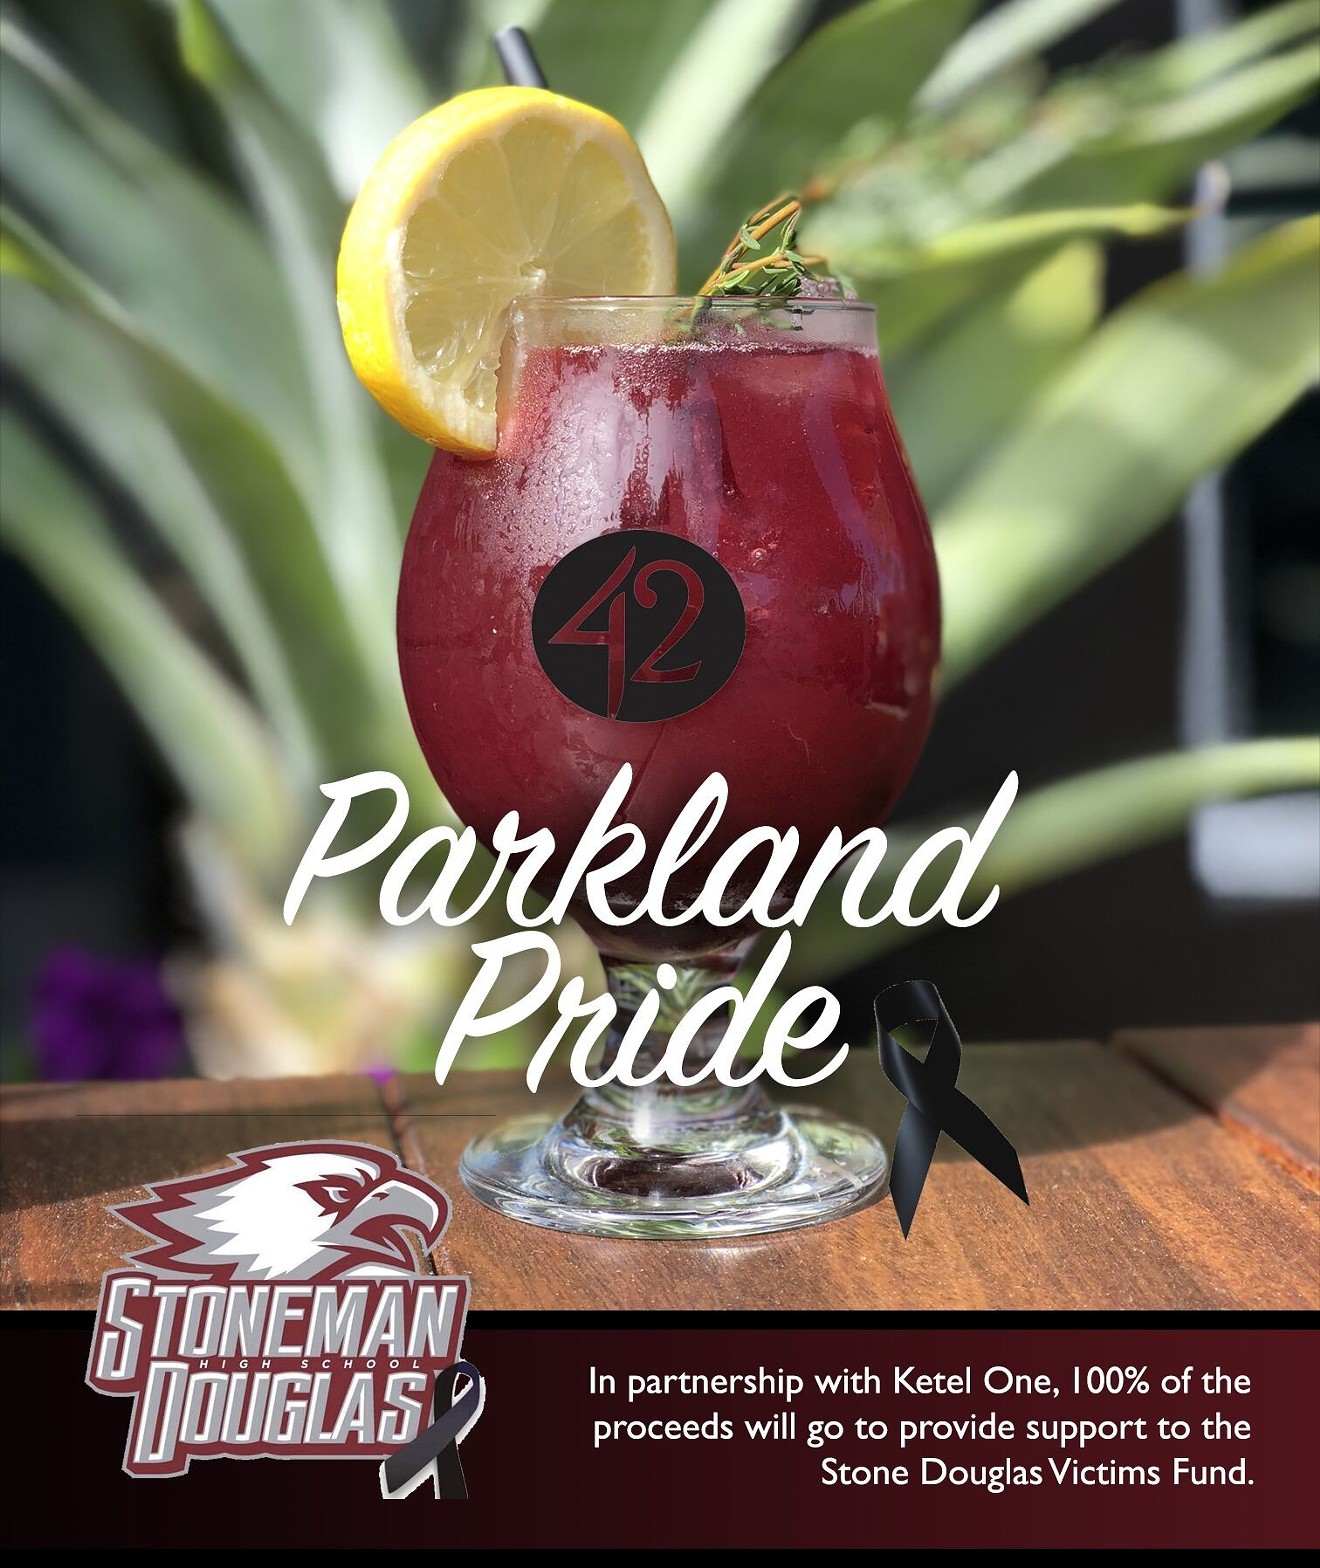 Parkland Pride cocktail